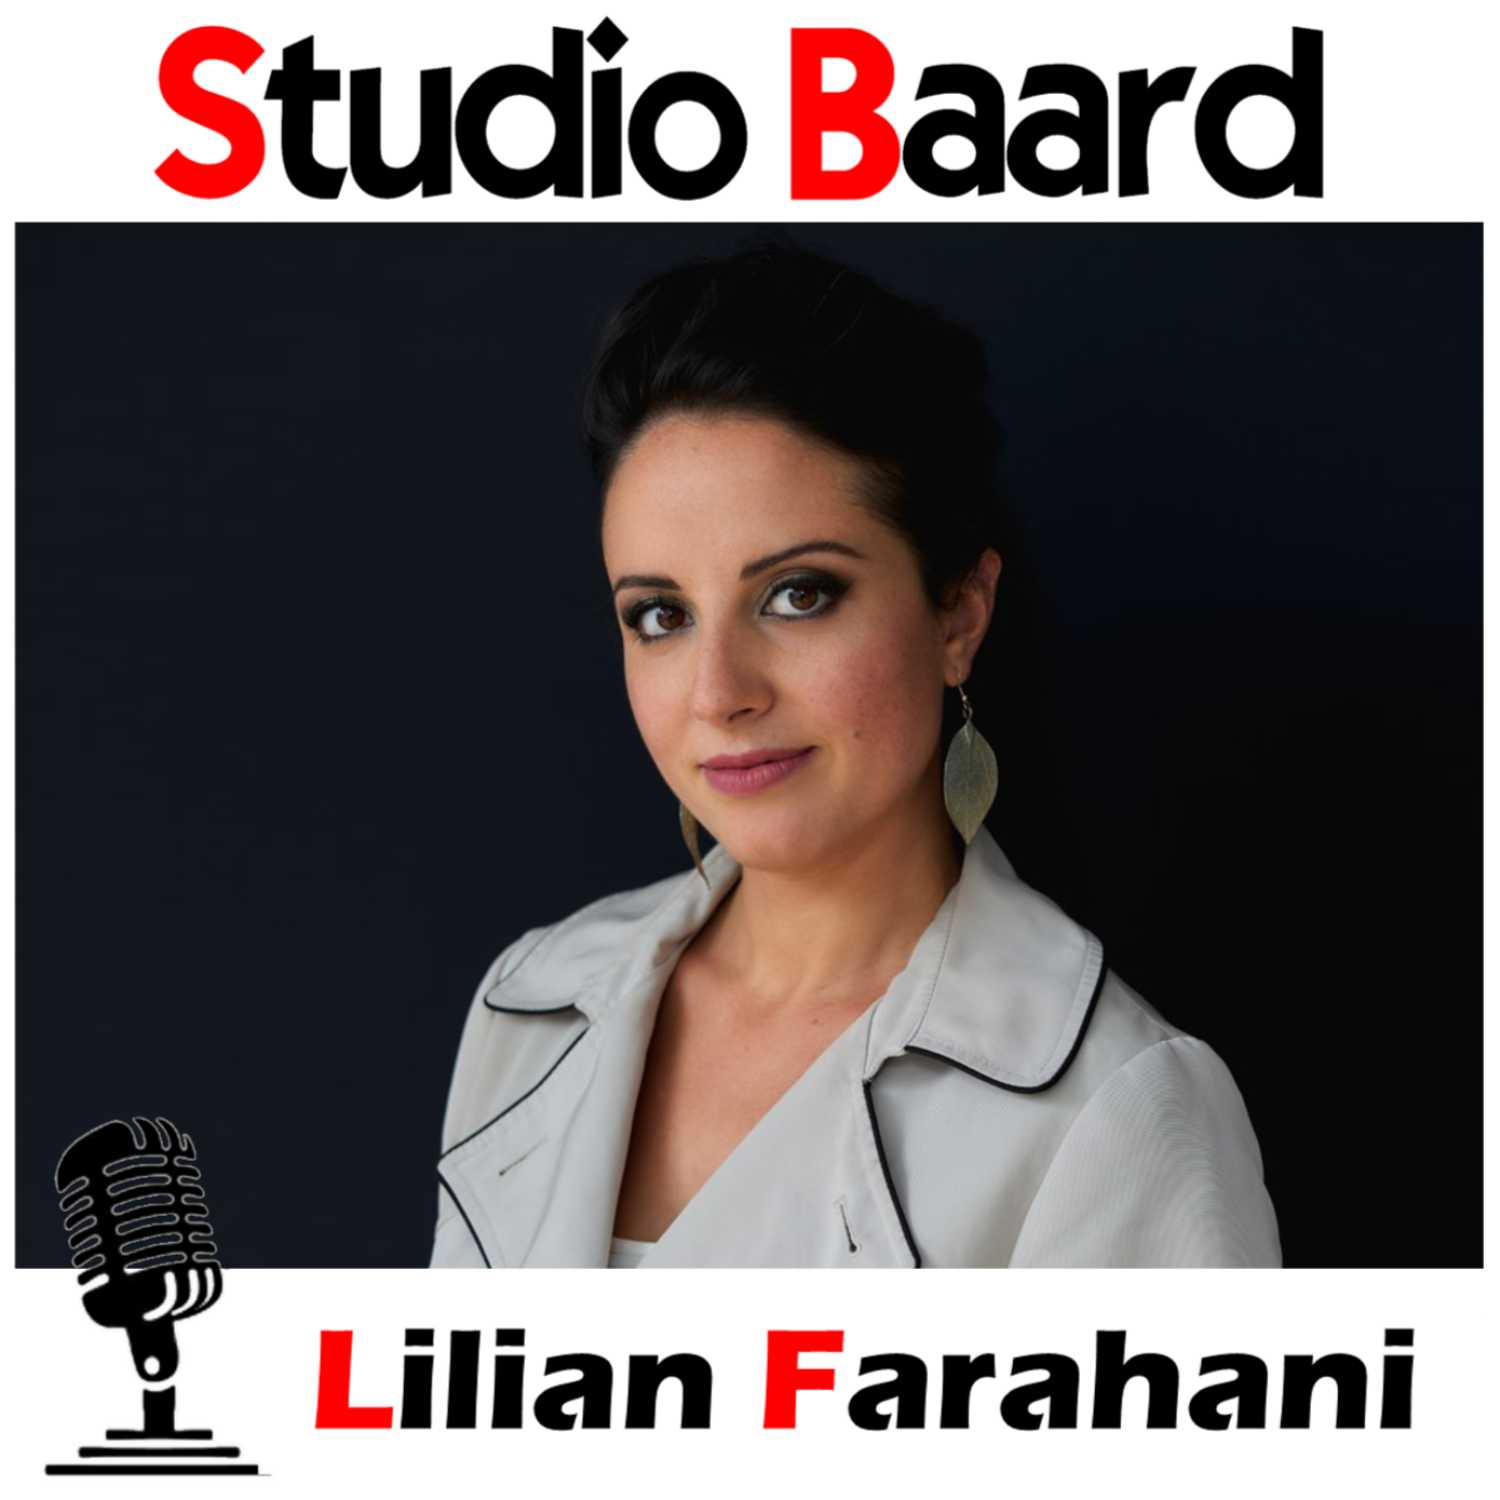 Studio Baard met Lilian Farahani (deel 1)